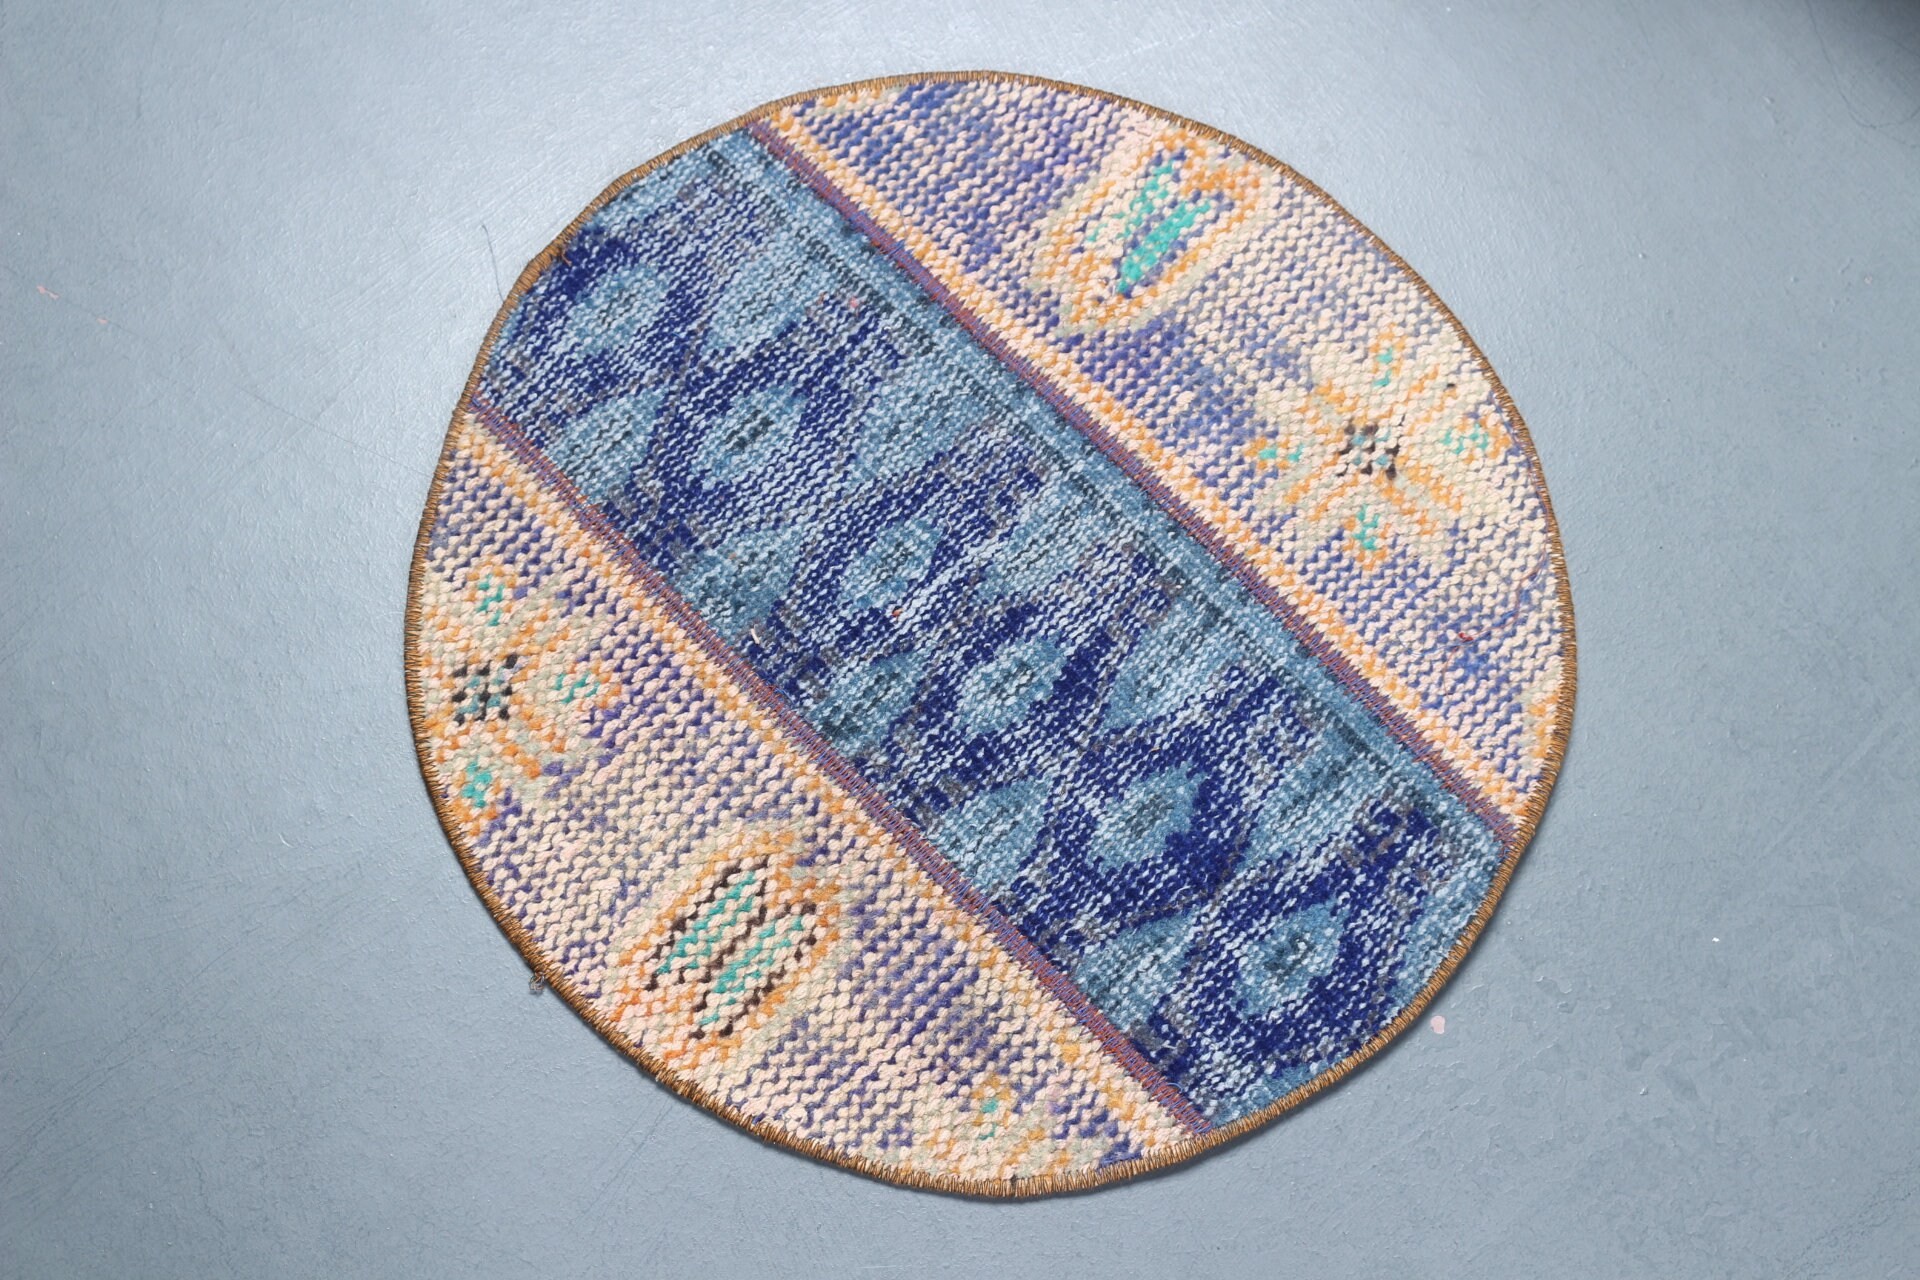 Abstract Rug, Vintage Rug, Turkish Rugs, Moroccan Rug, 1.7x1.7 ft Small Rug, Nursery Rugs, Entry Rugs, Oriental Rug, Blue Home Decor Rug